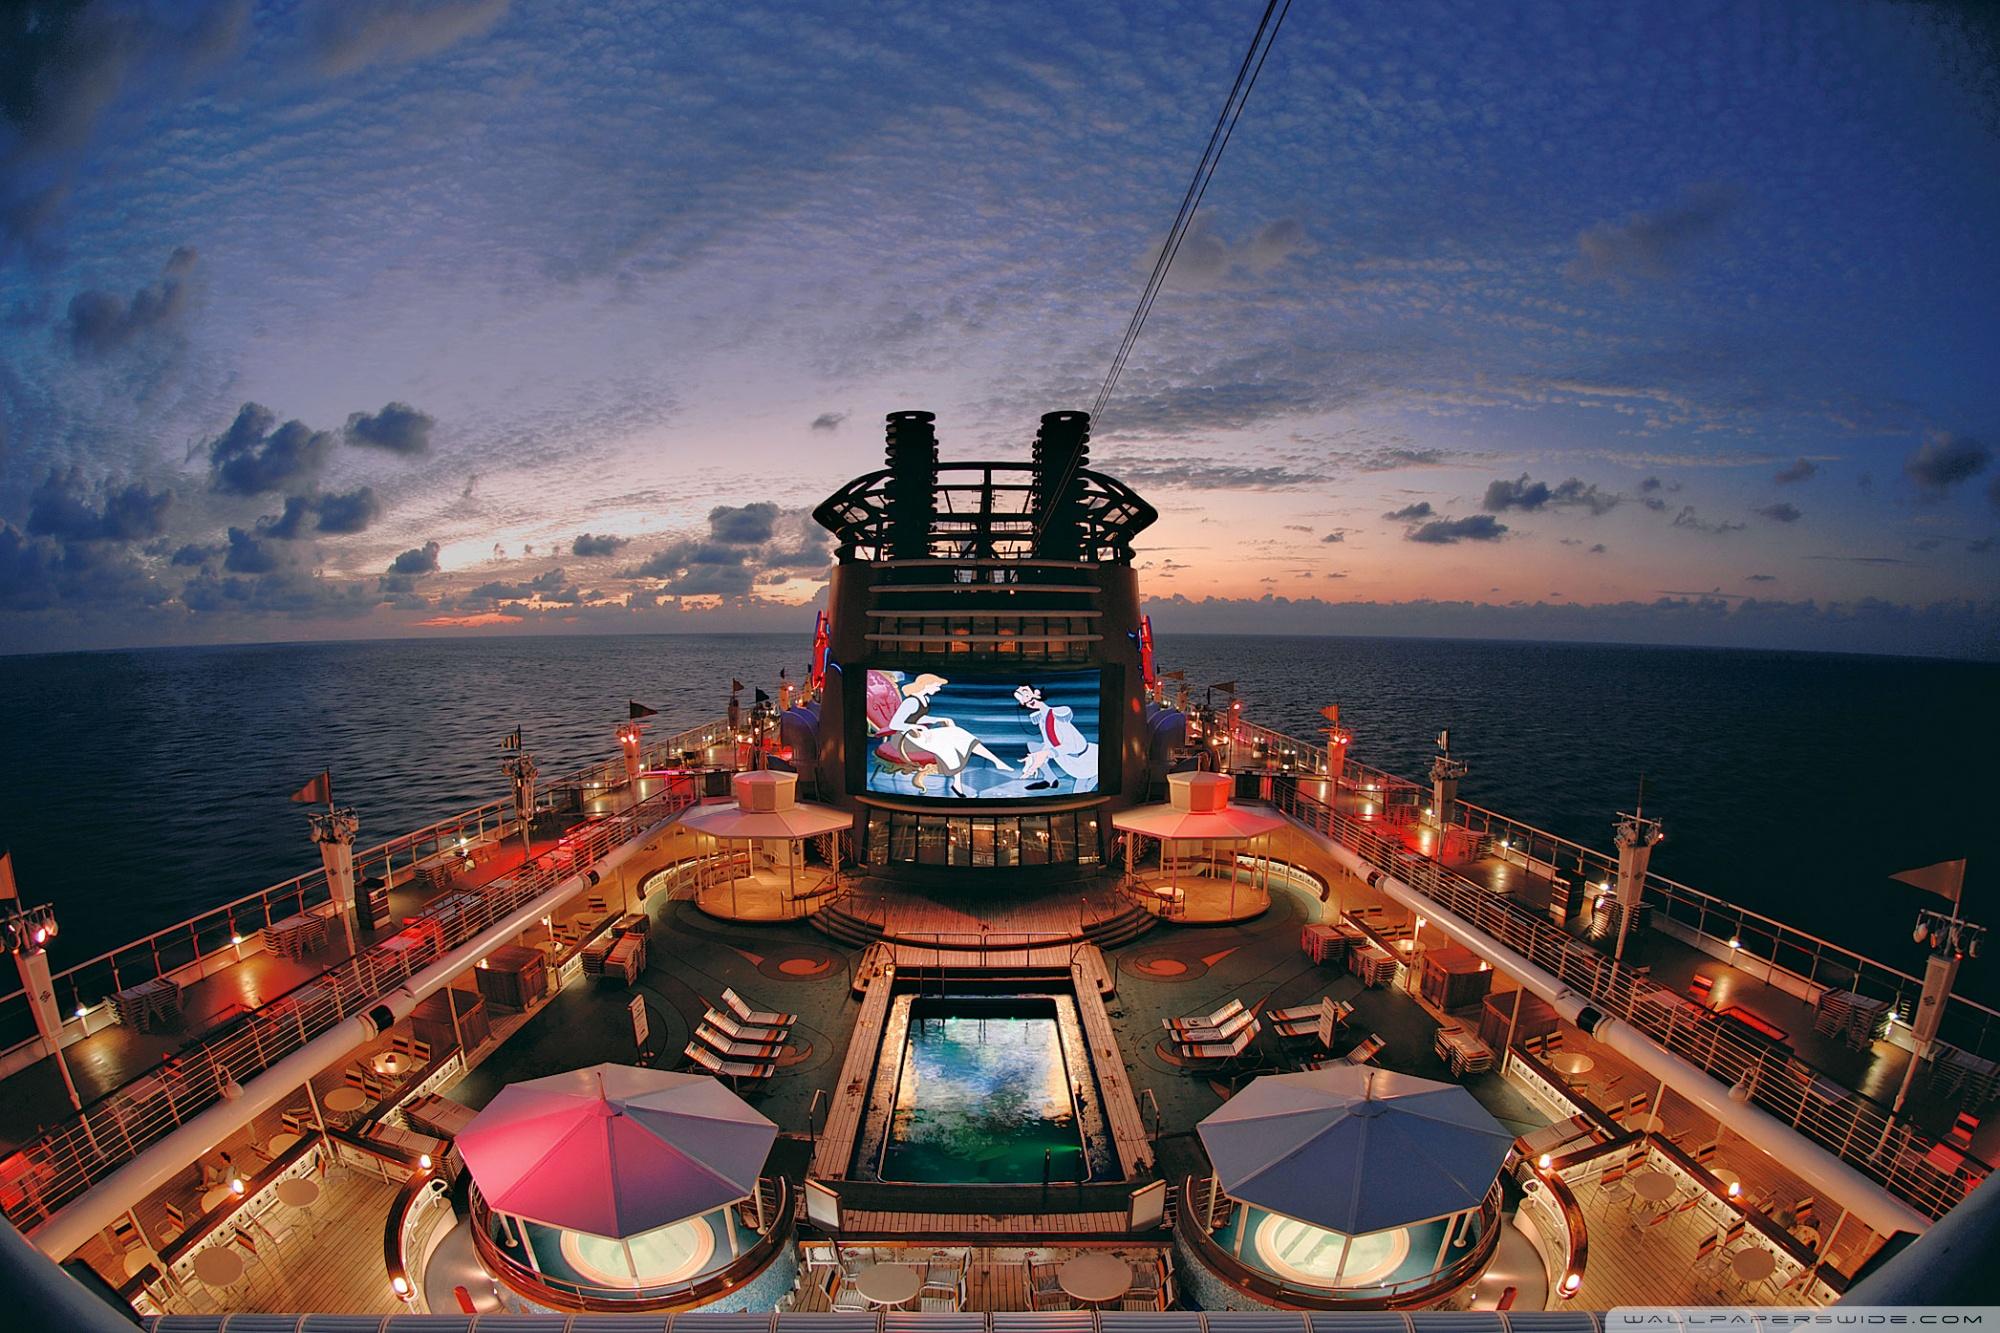 Cruise Ship Deck Night ❤ 4K HD Desktop Wallpaper for 4K Ultra HD TV